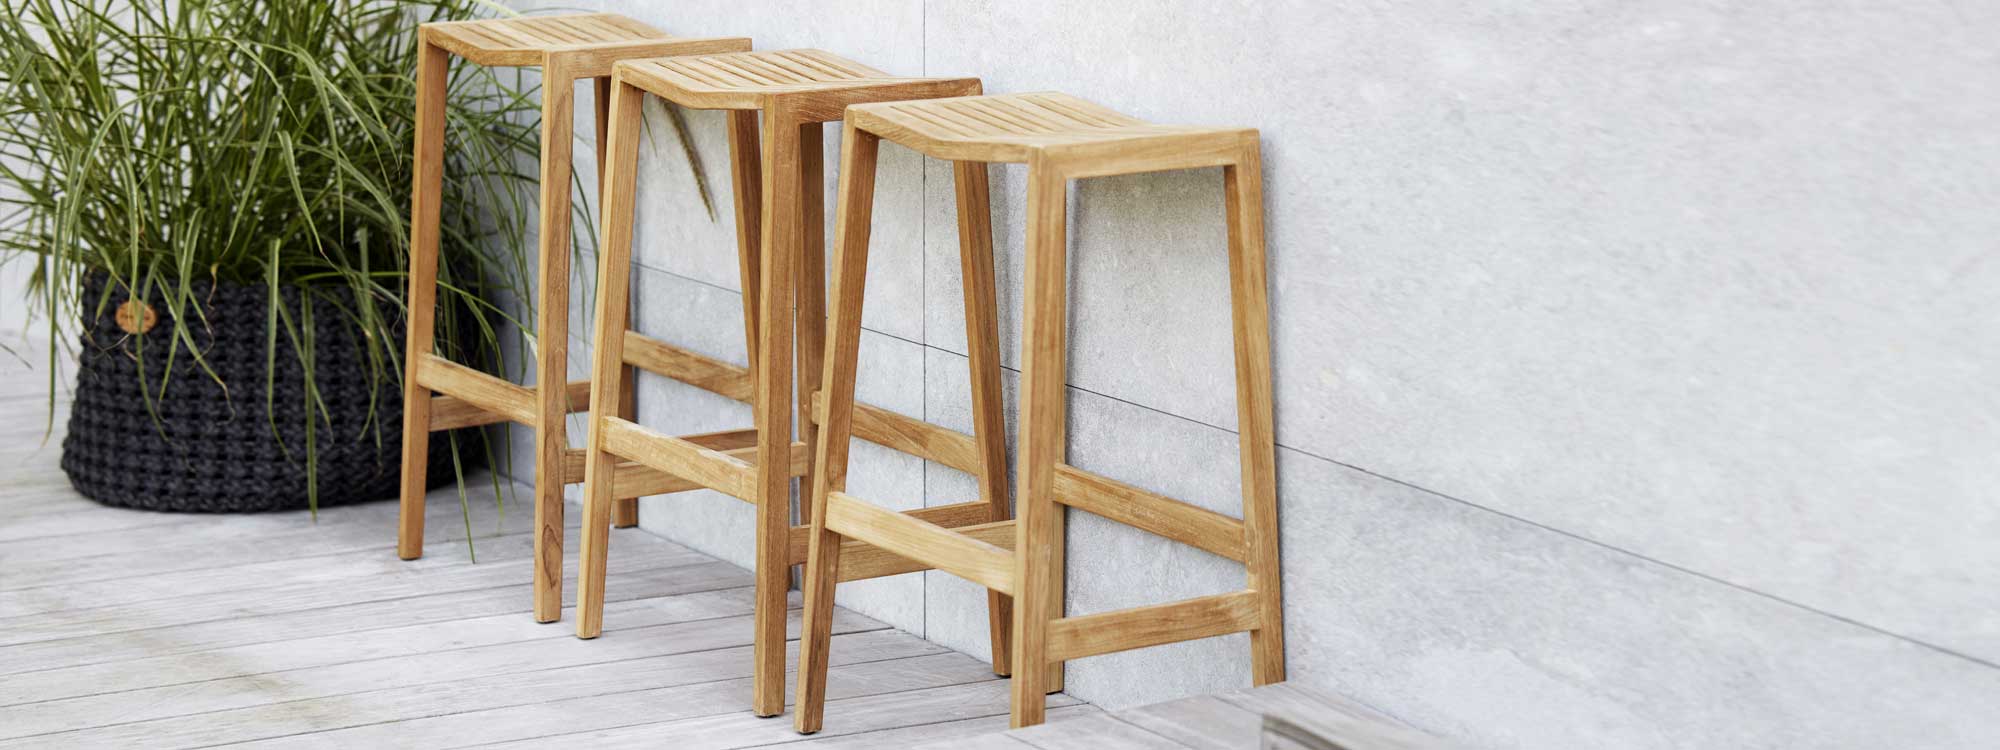 Image of 3 Flip teak bar stools in WWF certified hardwood by Caneline